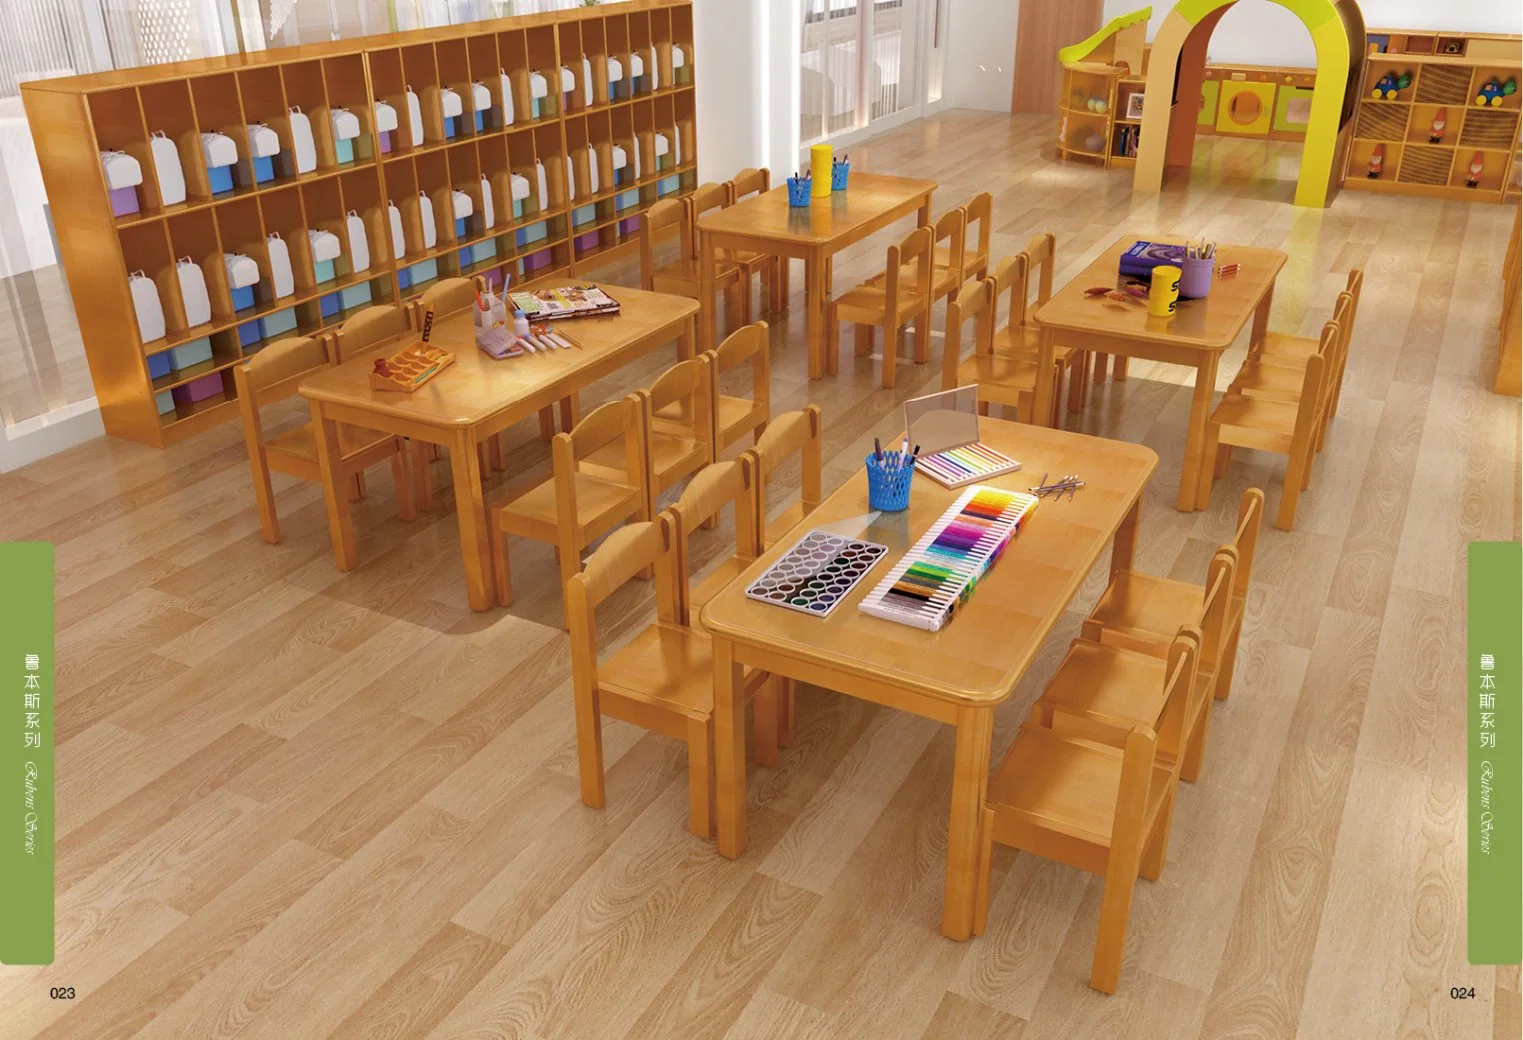 New Model Kindergarten Wood Kids Furniture, Baby Furniture, Wooden Furniture, Stacking Chair Furniture, Children Furniture, School Classroom Furniture